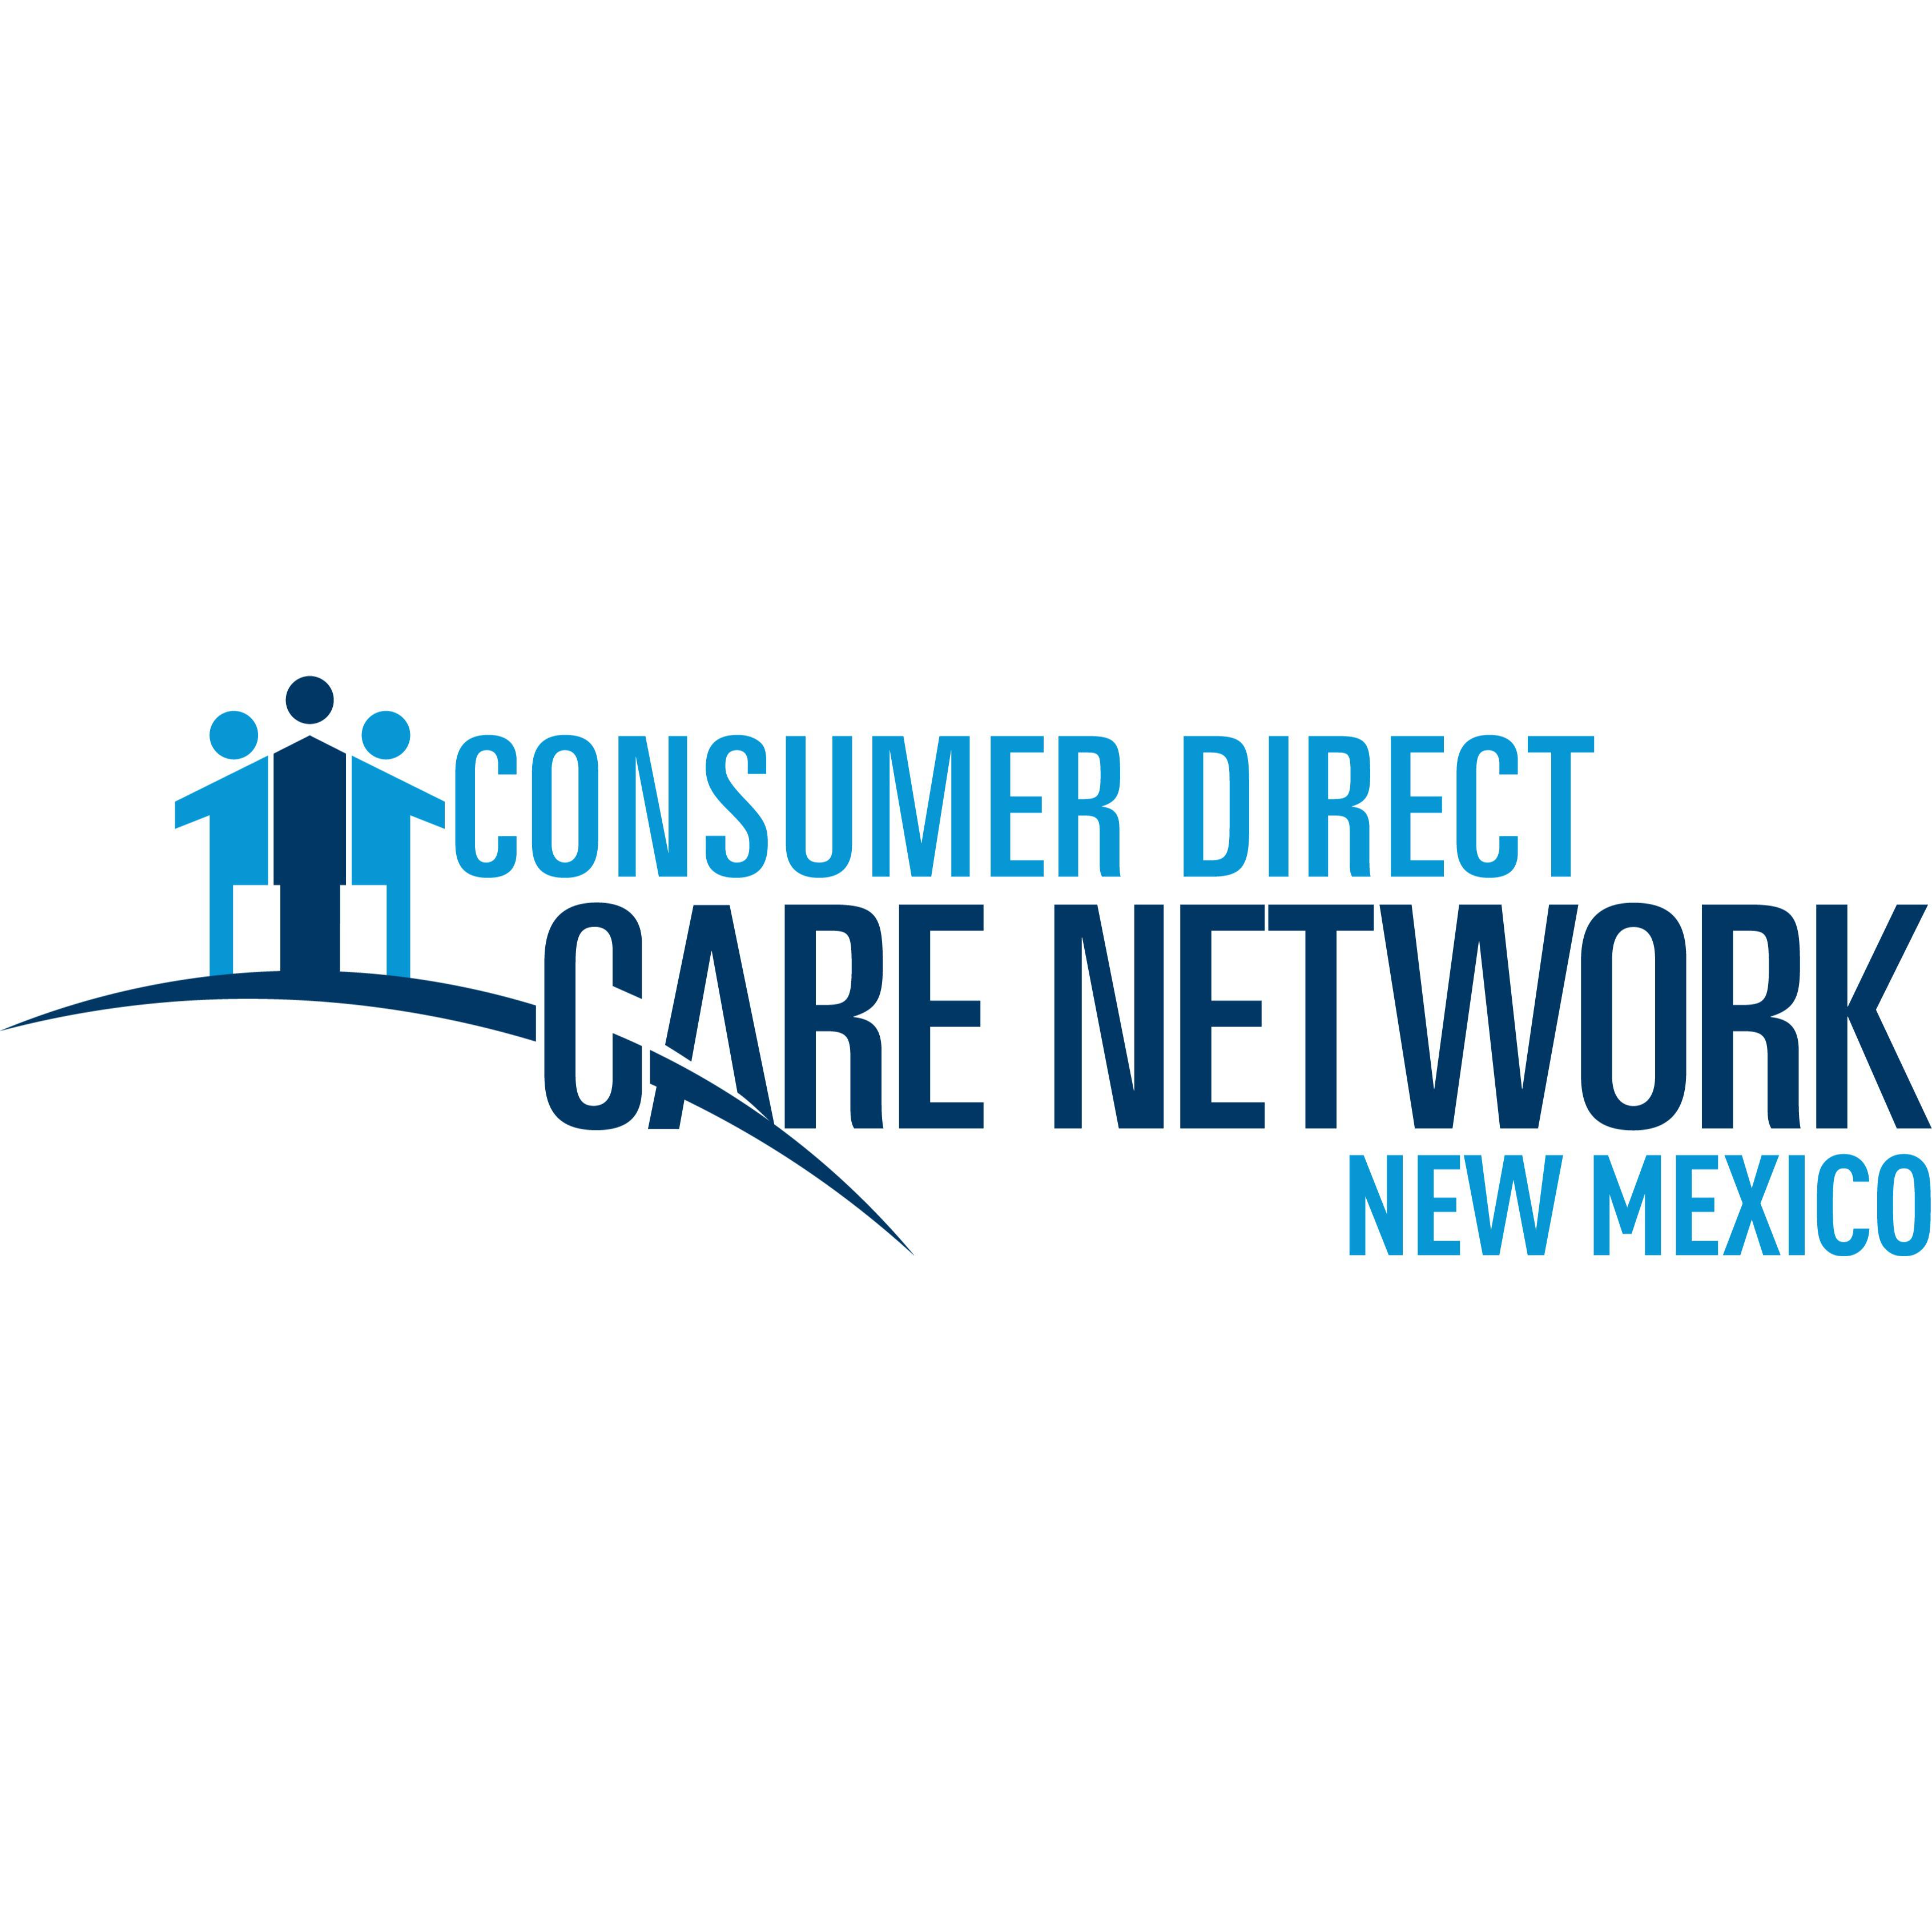 Consumer Direct Care Network New Mexico